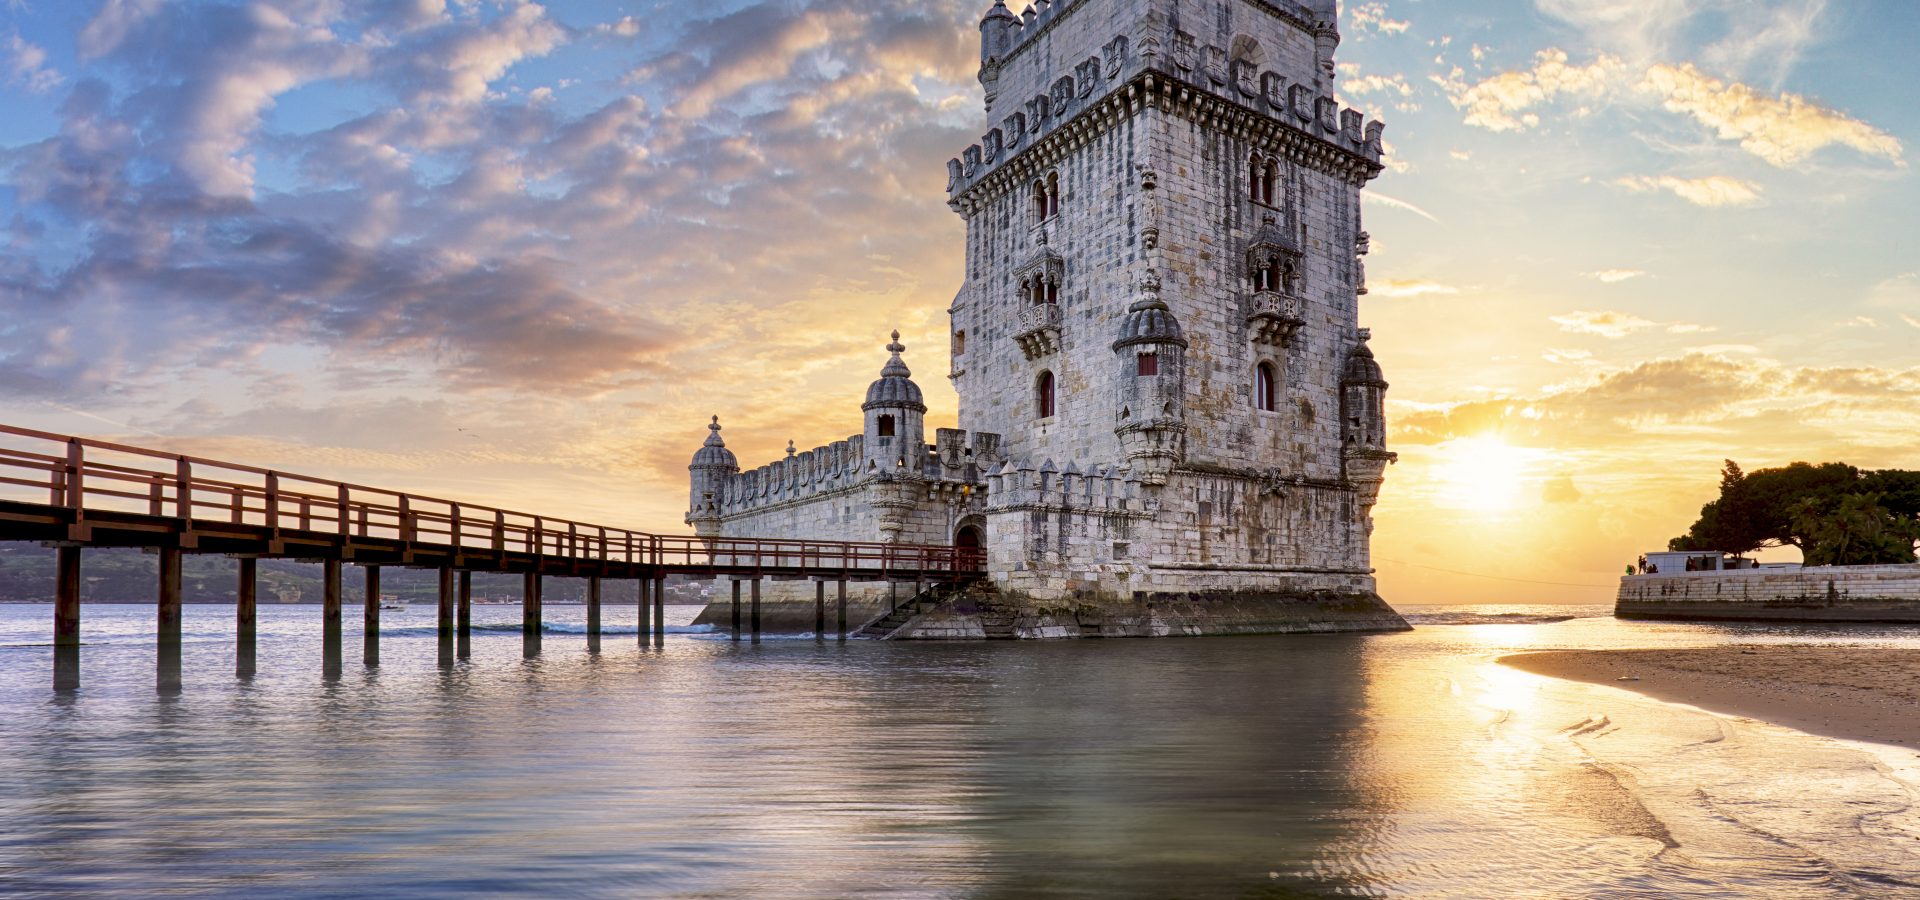 Lisbon, Belem Tower - Tagus River, Portugal